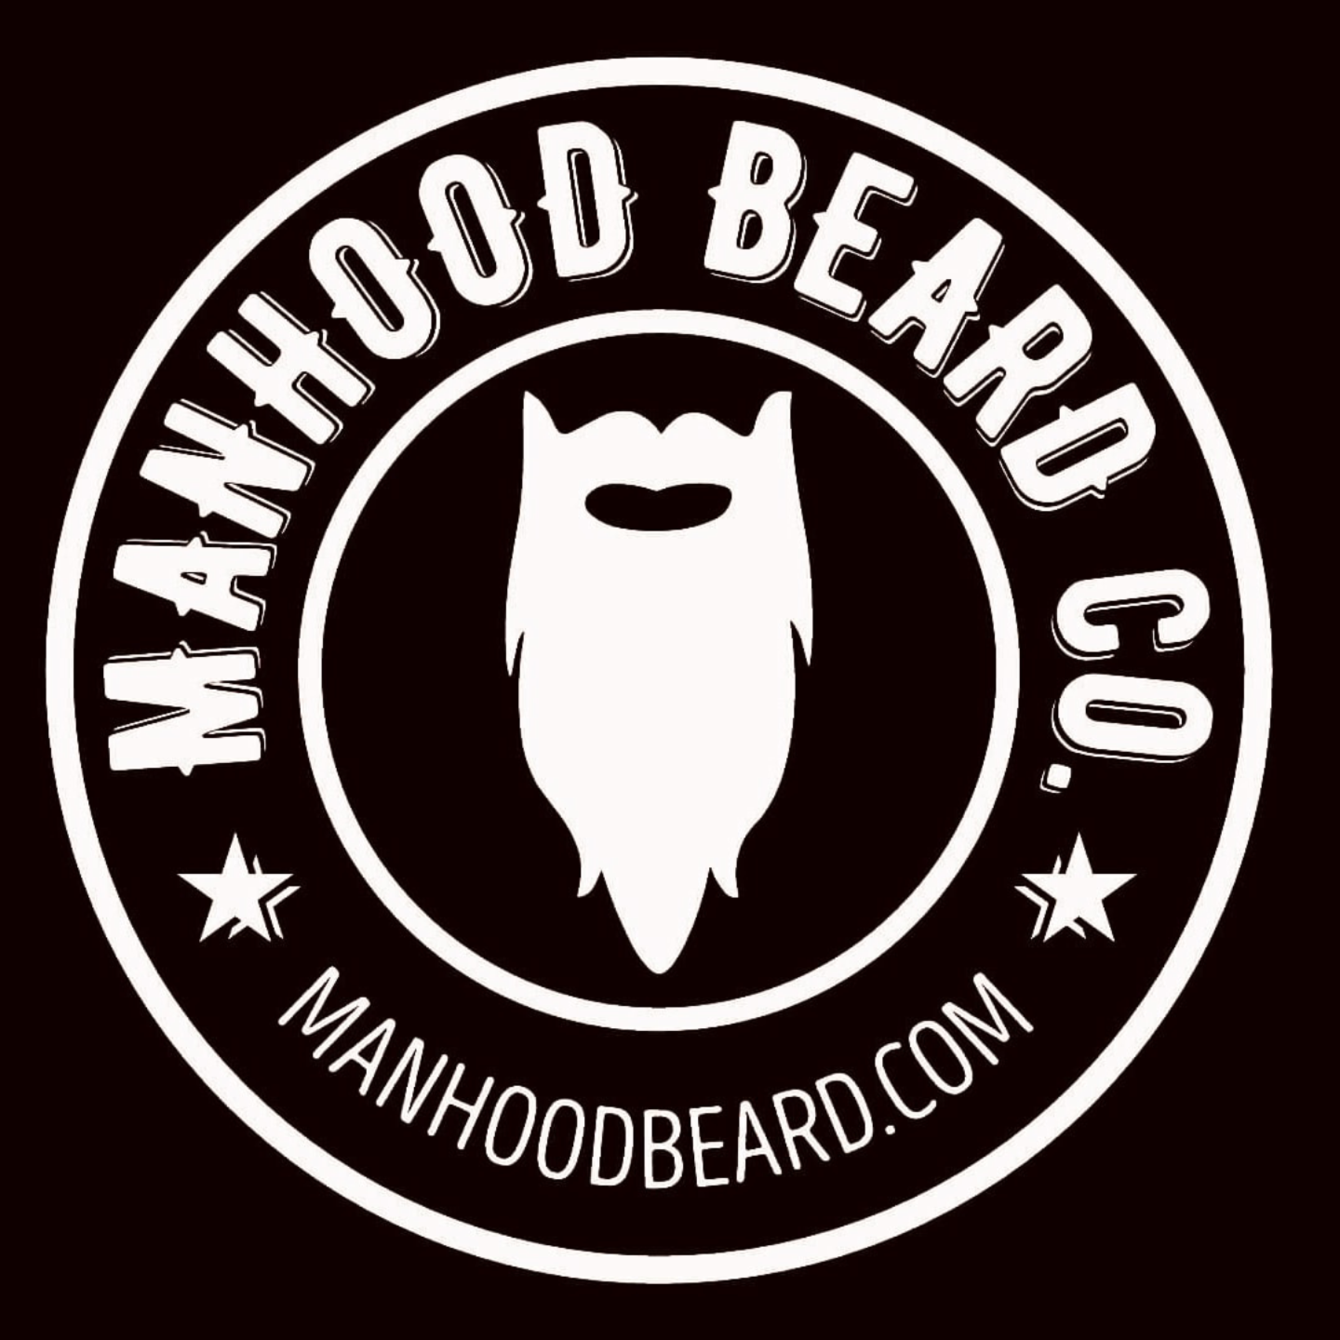 Manhood Beard Co.